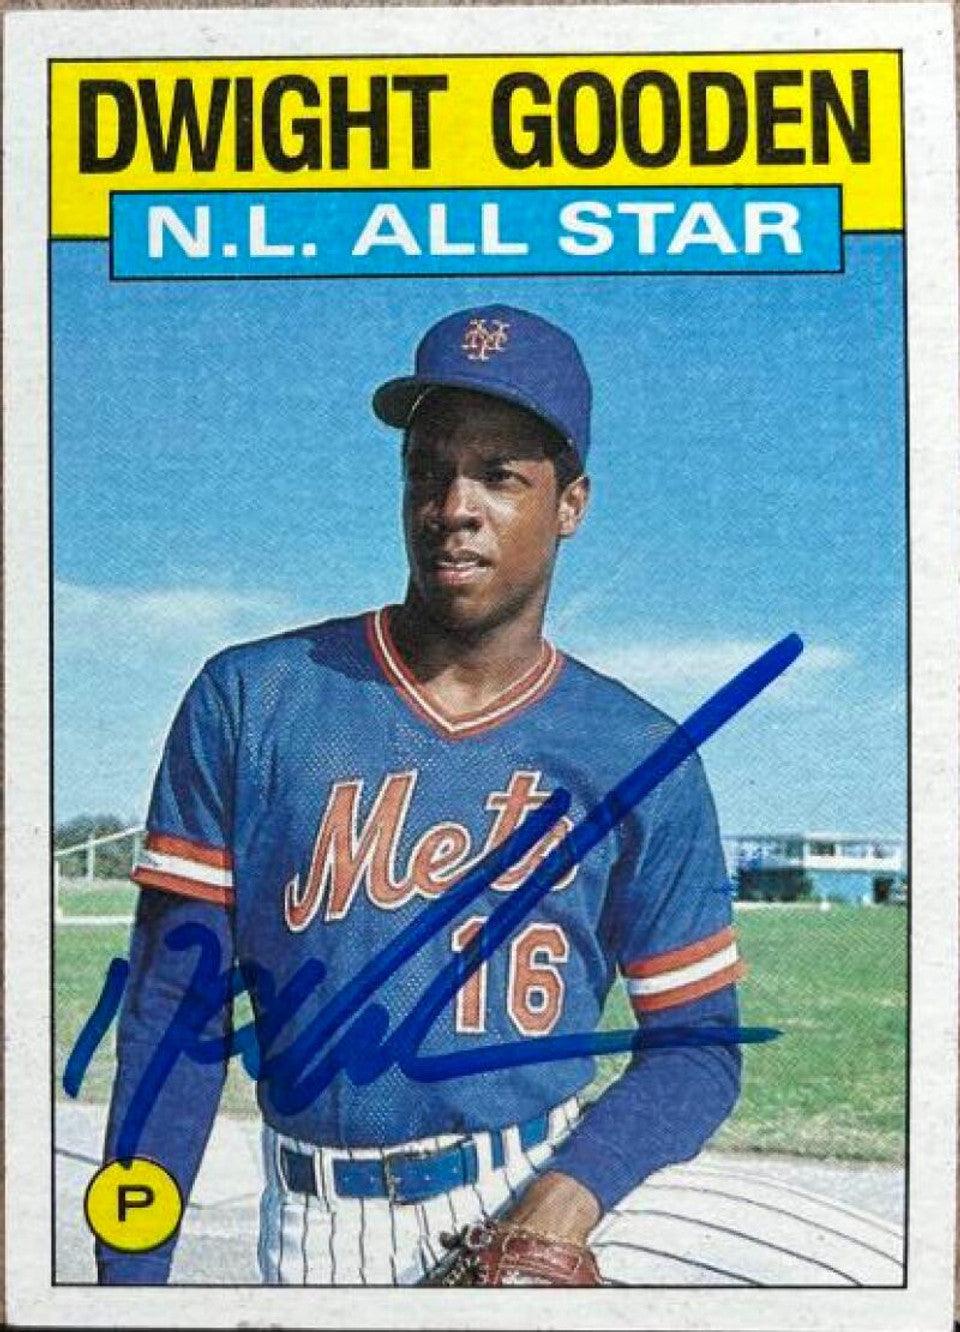 Dwight Gooden Signed 1986 Topps All-Star Baseball Card - New York Mets